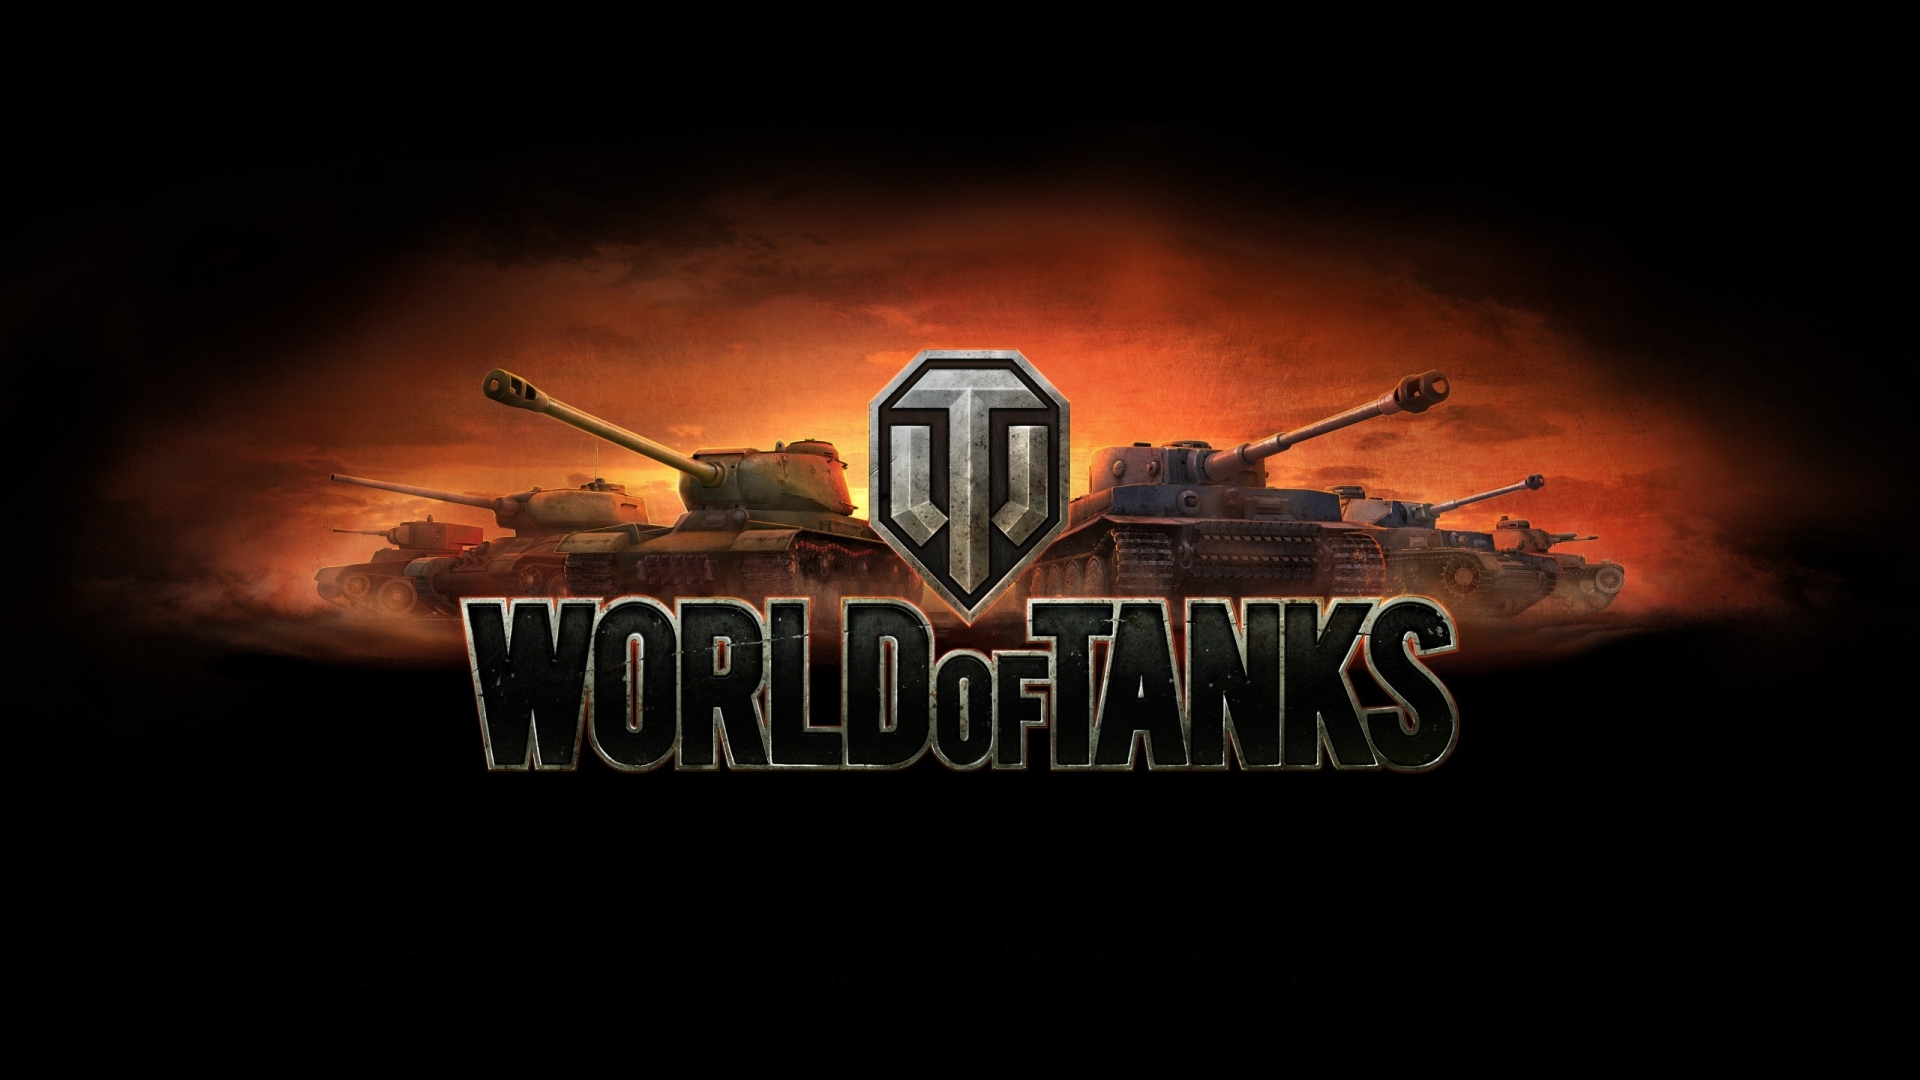 World of Tanks Poster for 1920 x 1080 HDTV 1080p resolution